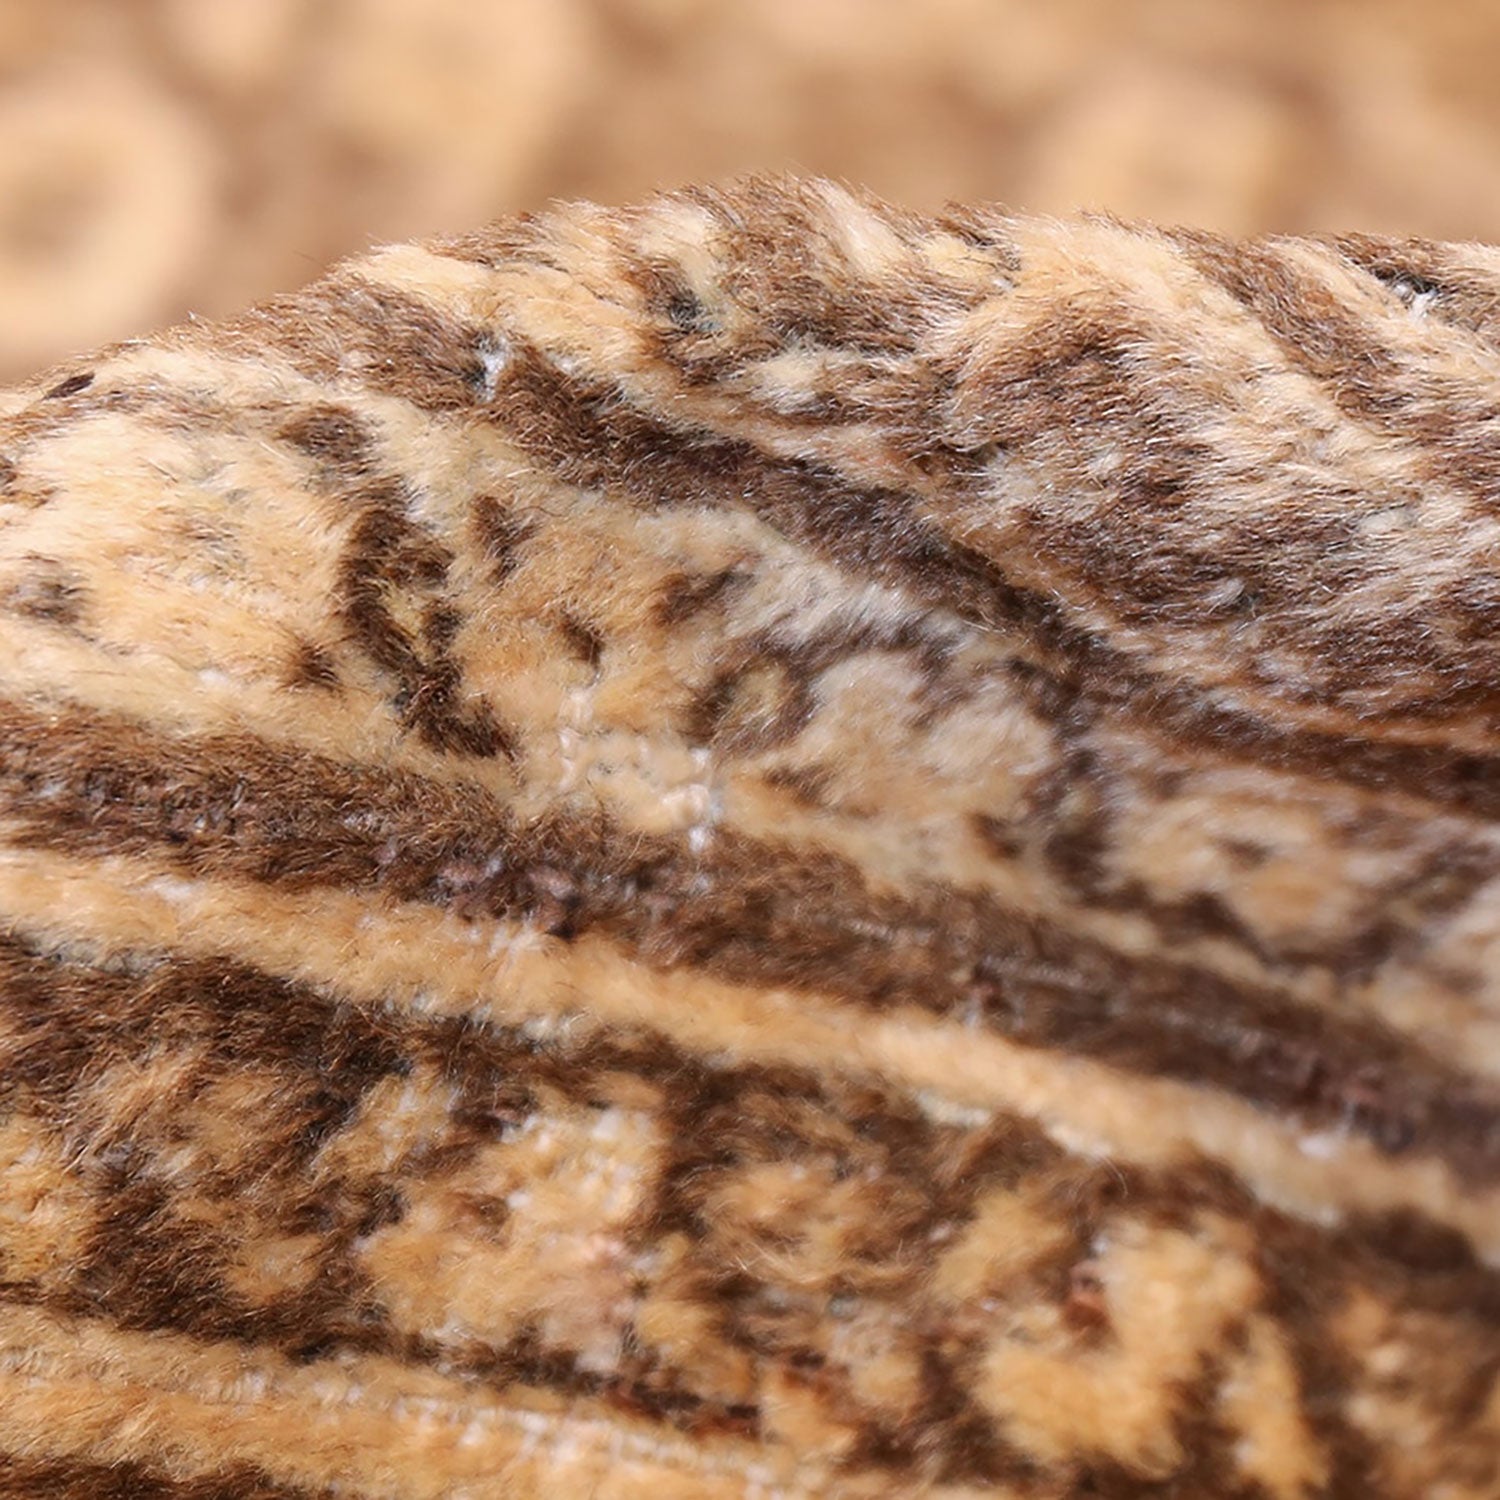 Close-up of a tiger's fur showcasing its distinctive orange-brown stripes.